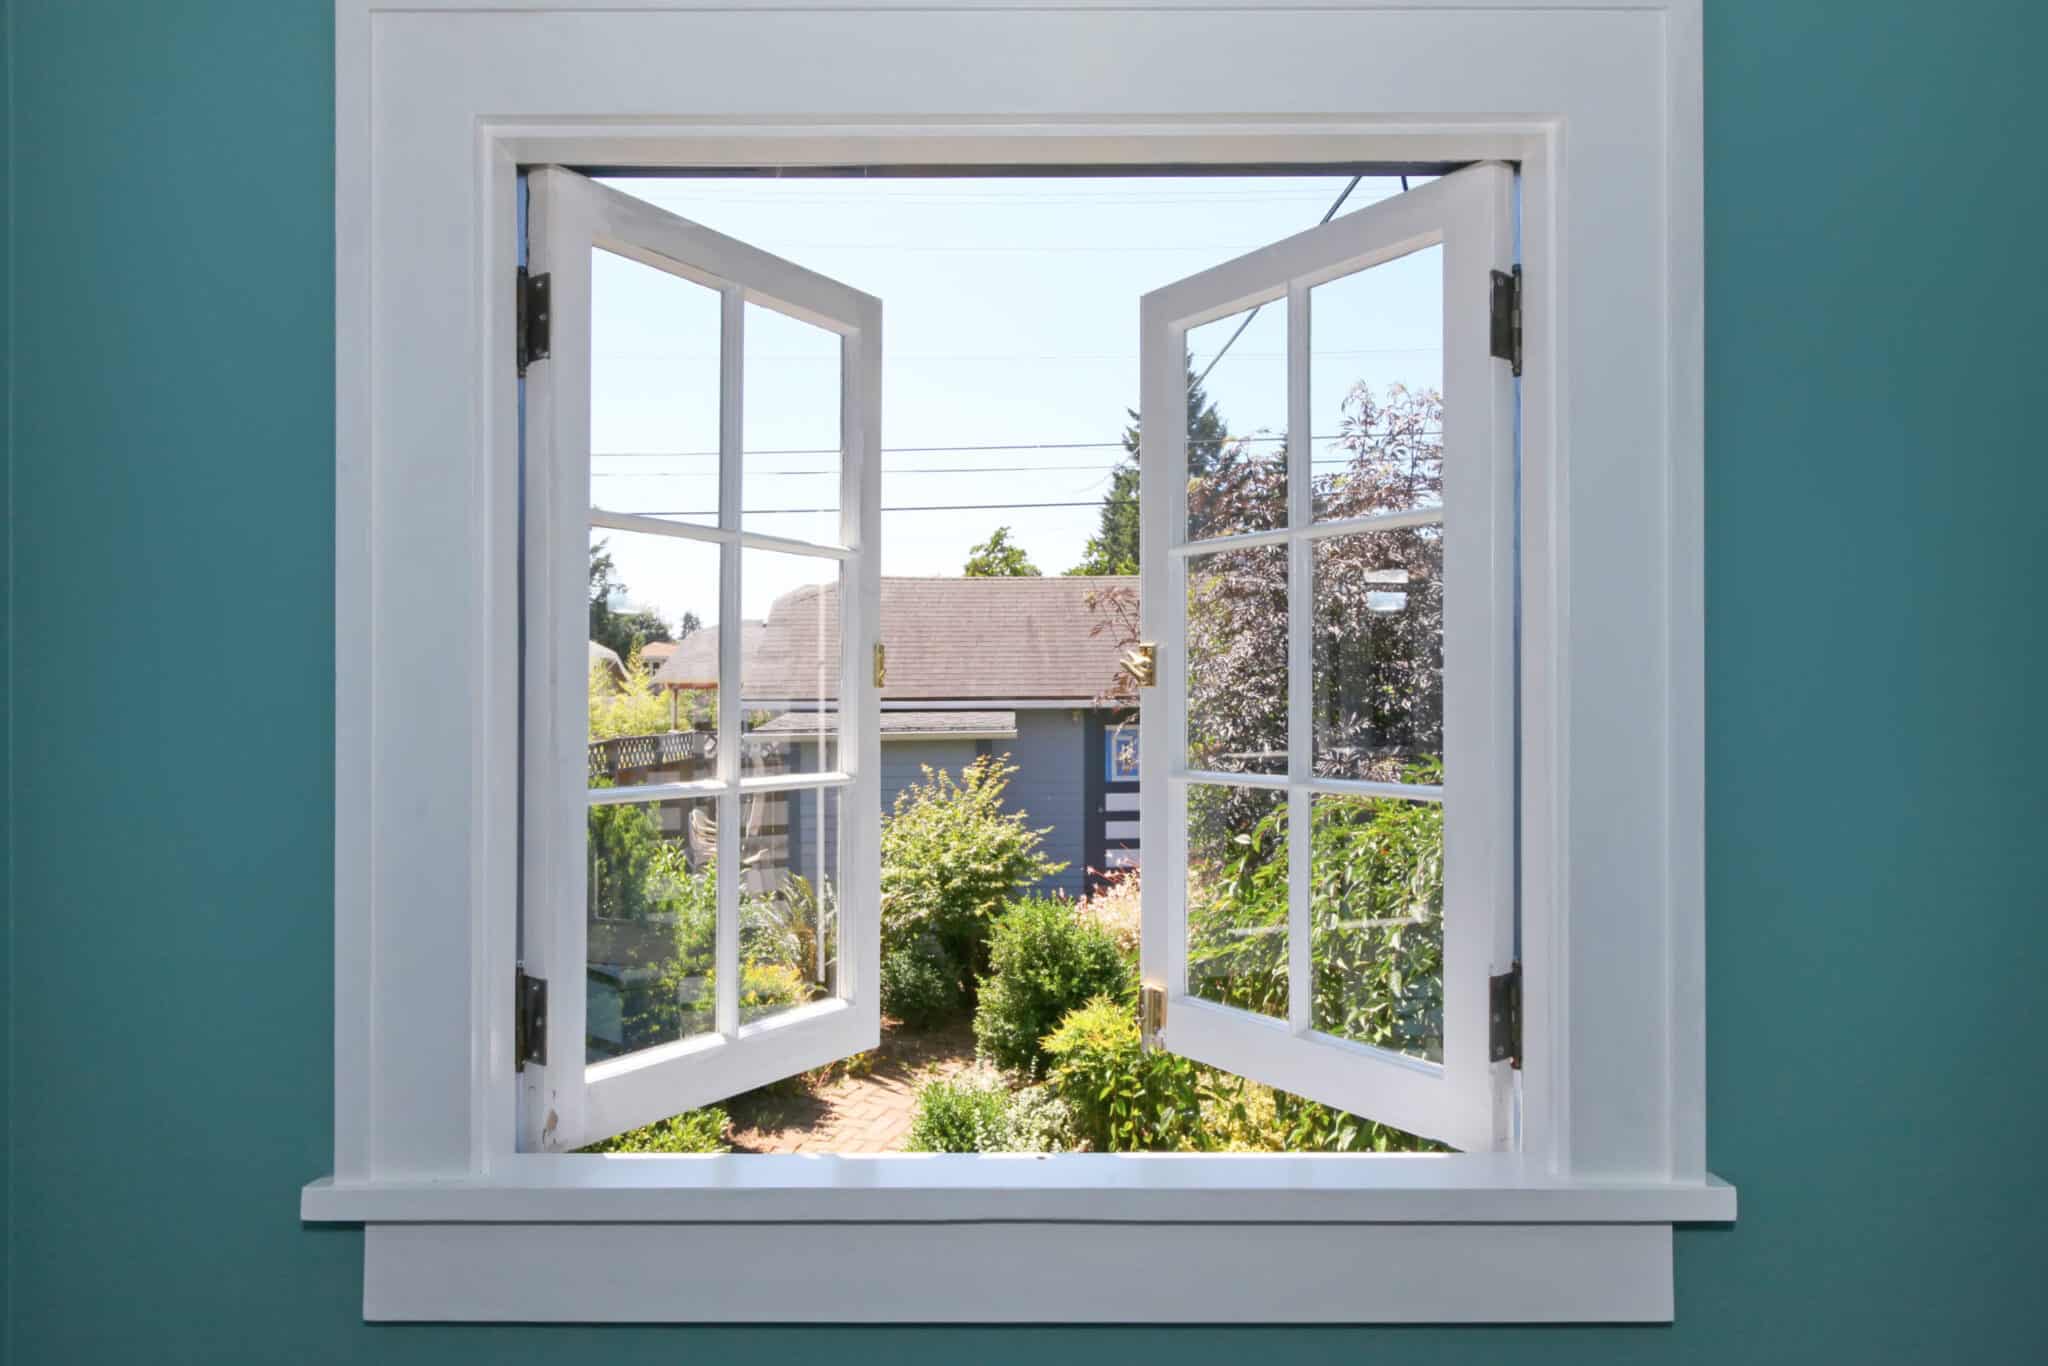 A casement window opening to the backyard